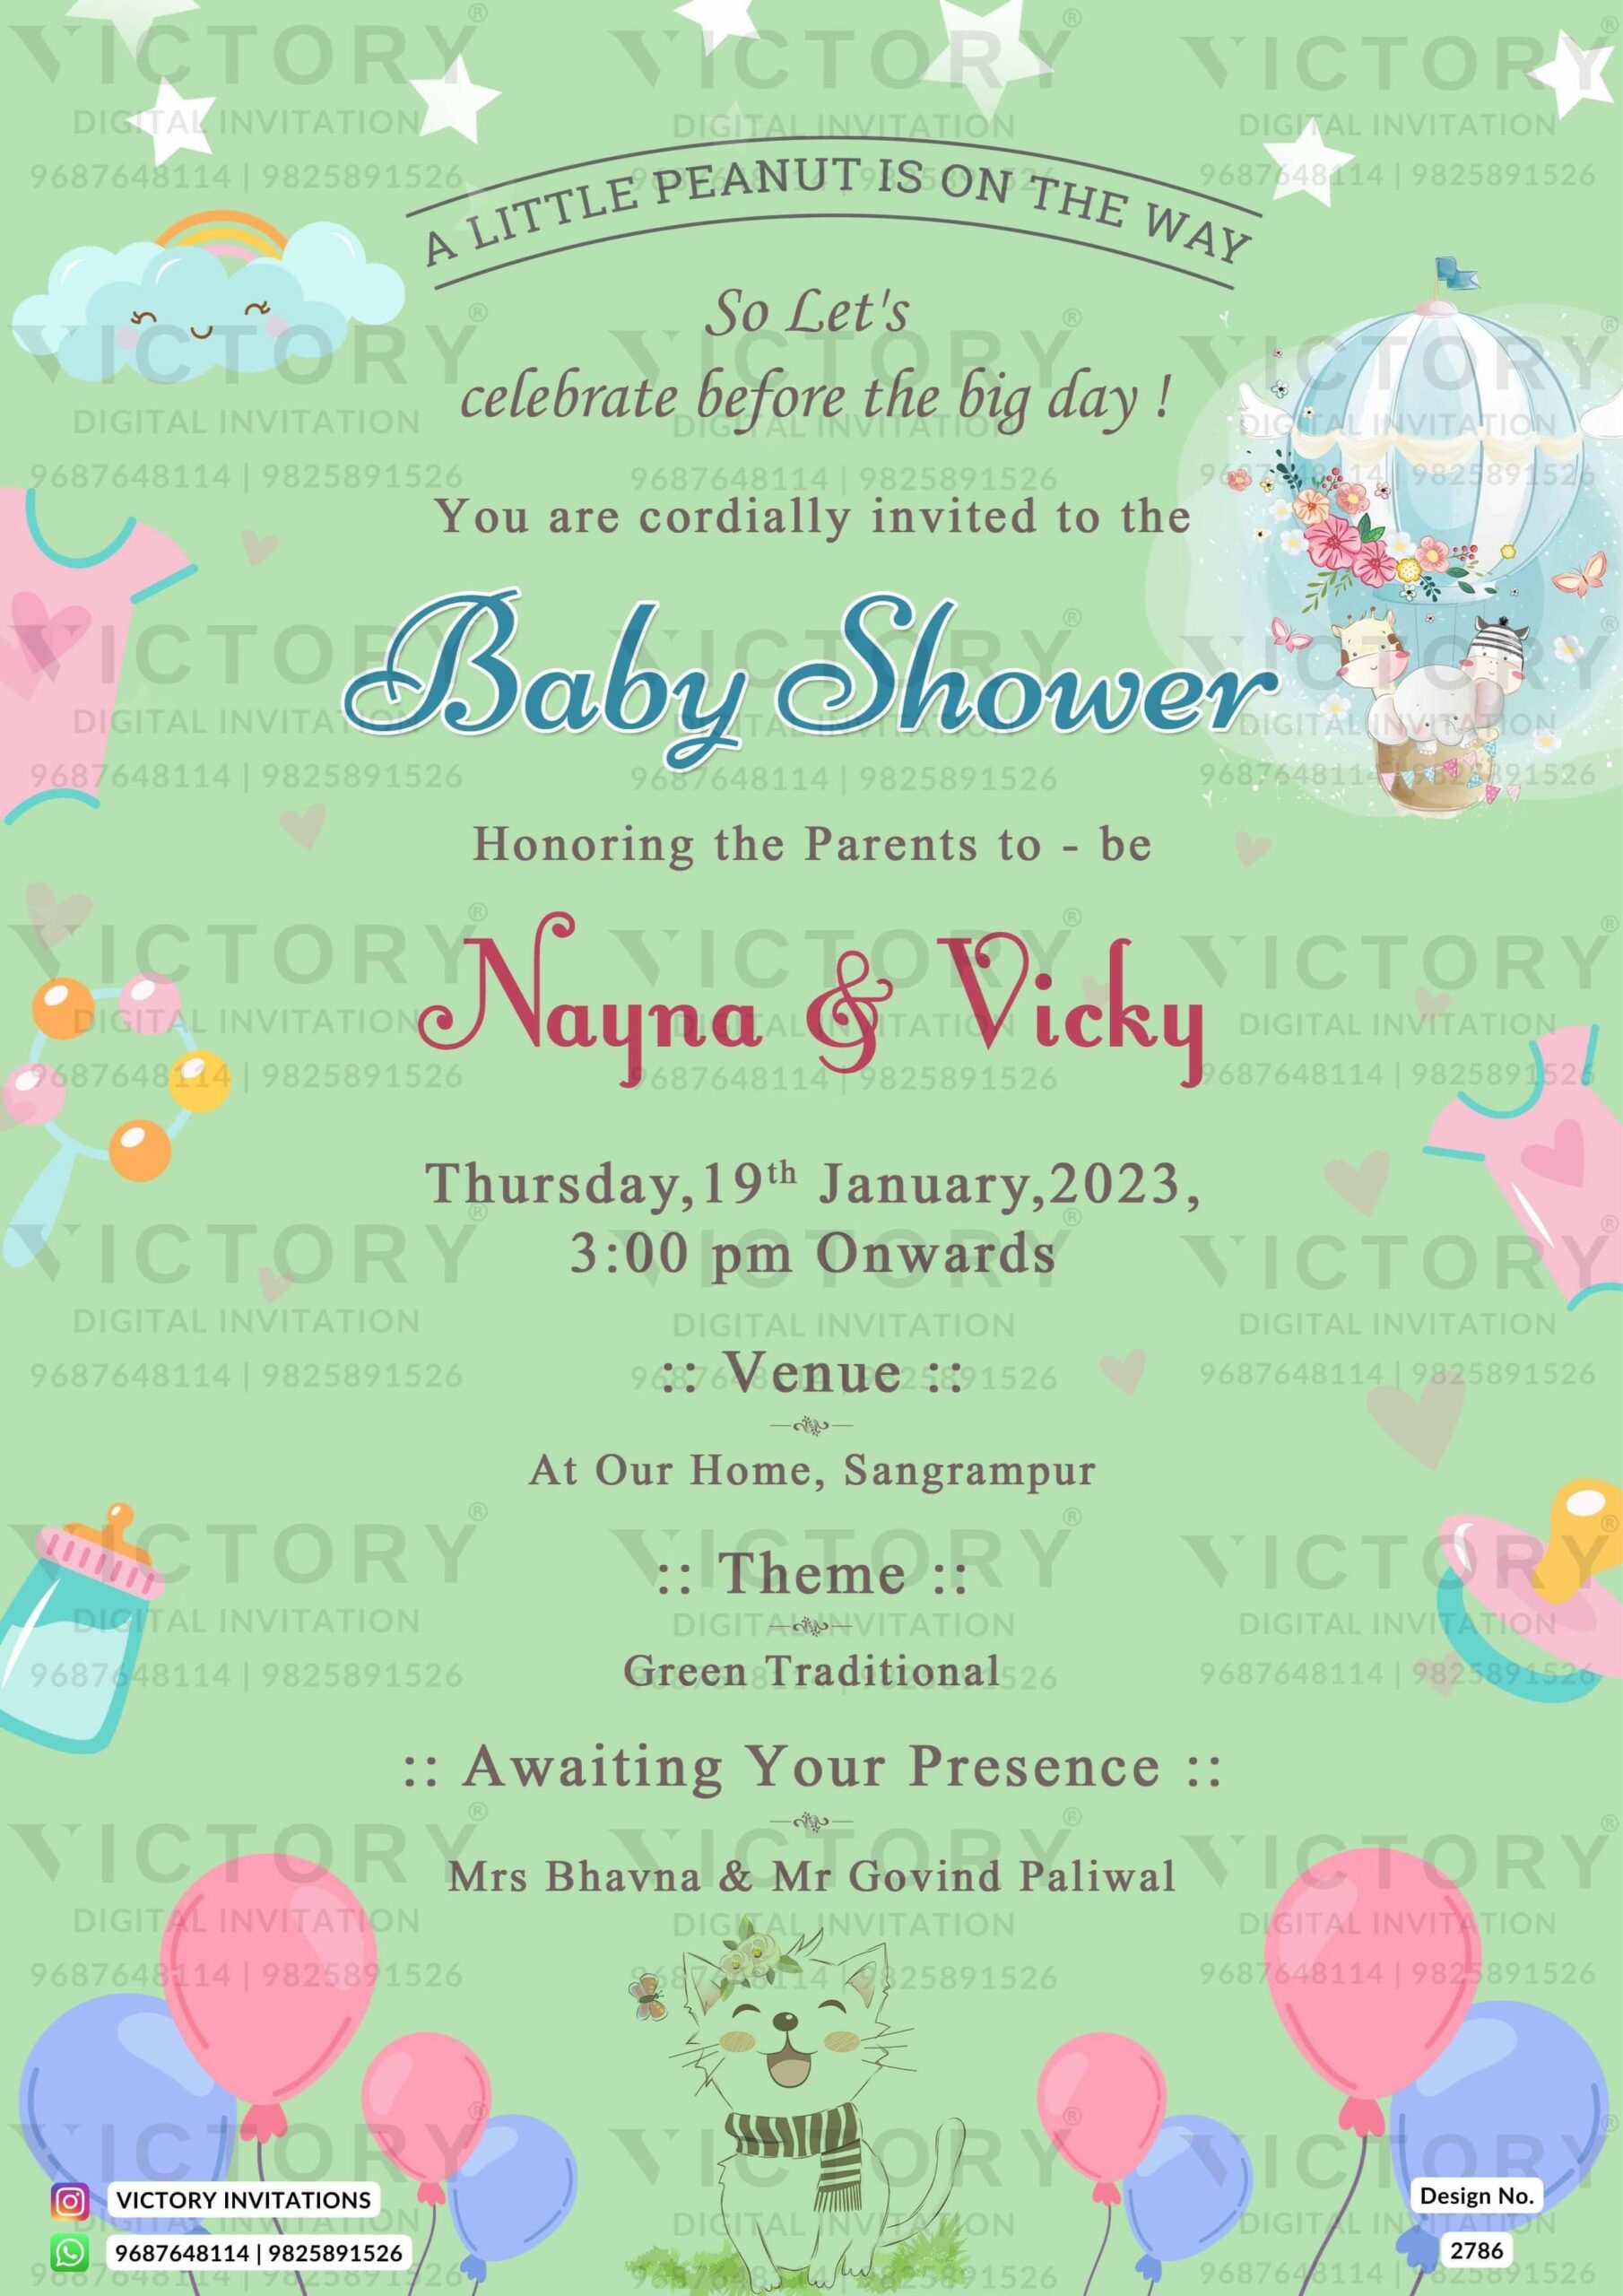 Baby Shower digital invitation card in english design no.2786